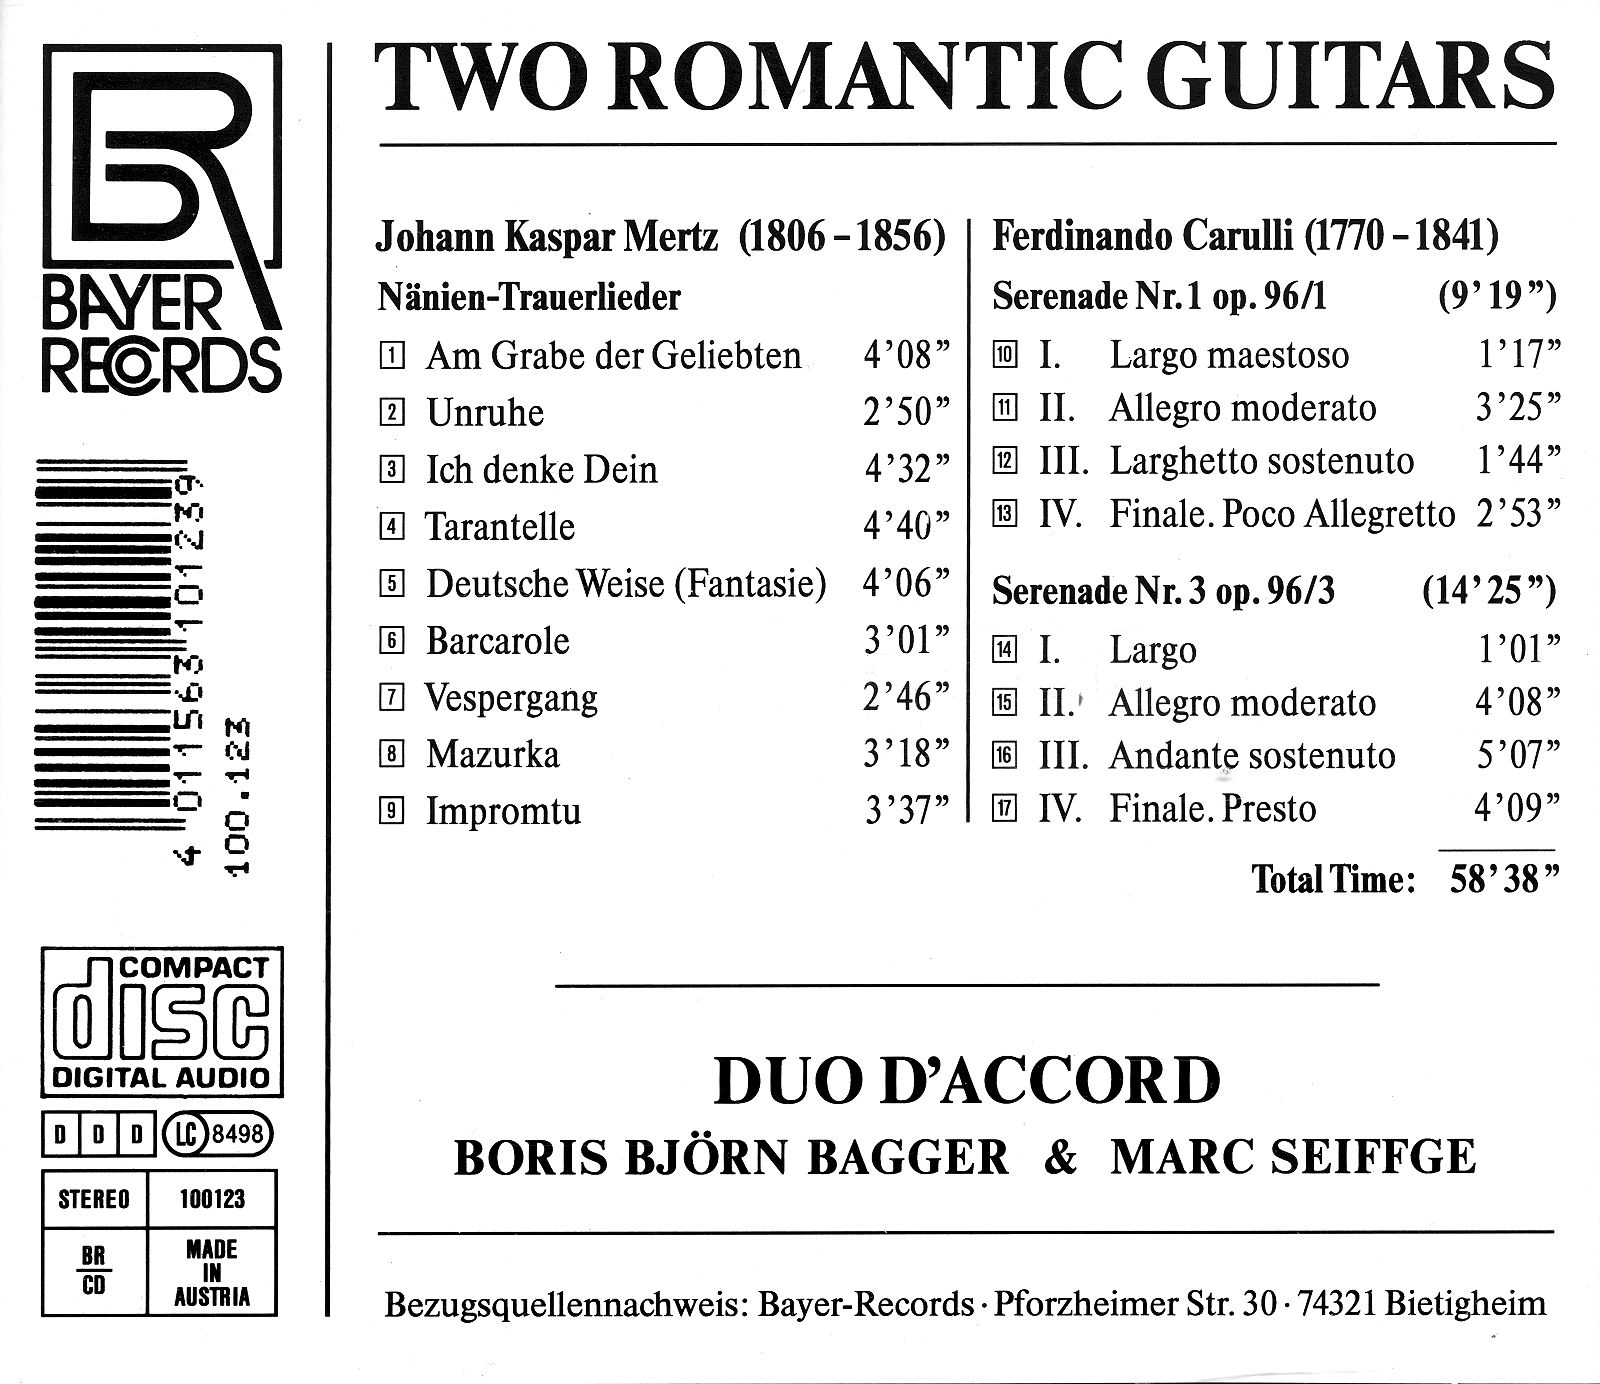 Two romantic Guitars